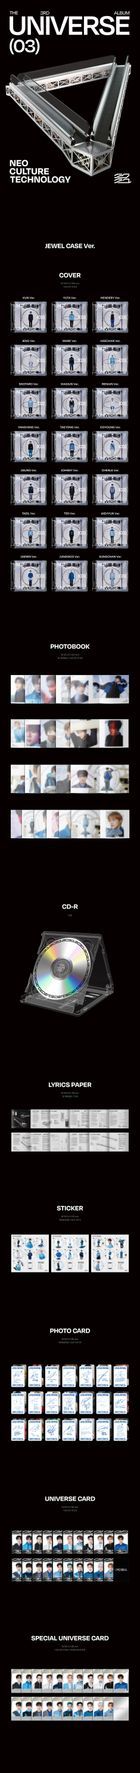 NCT Vol. 3 - Universe (Jewel Case Version) (Kun Version)